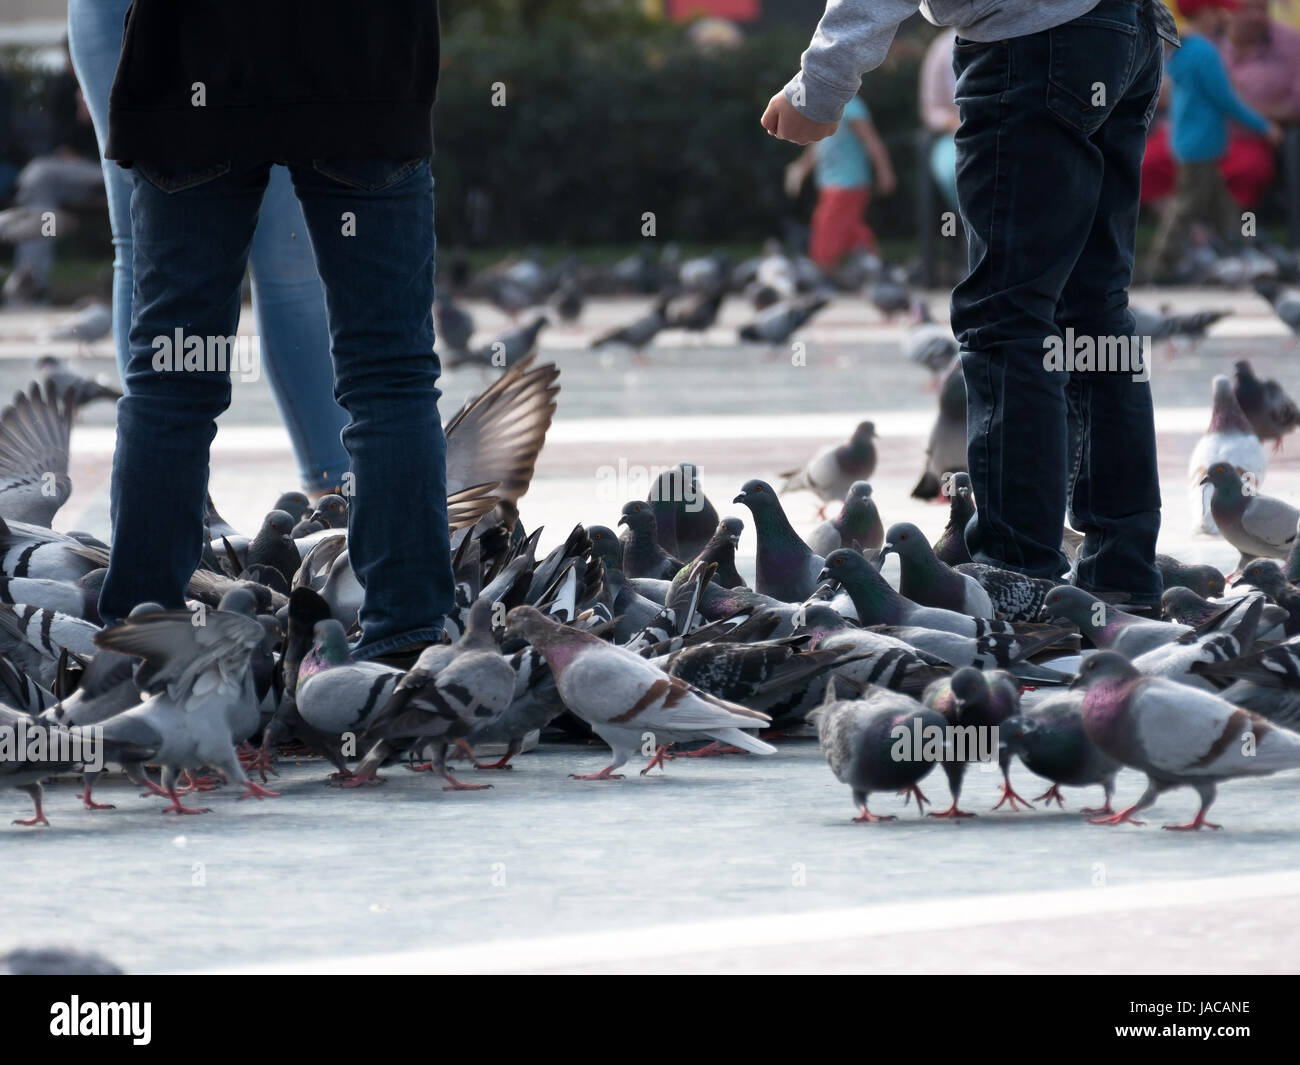 Un homme se nourrit les pigeons dans une ville, Ein Mann füttert in einer Stadt Tauben Banque D'Images